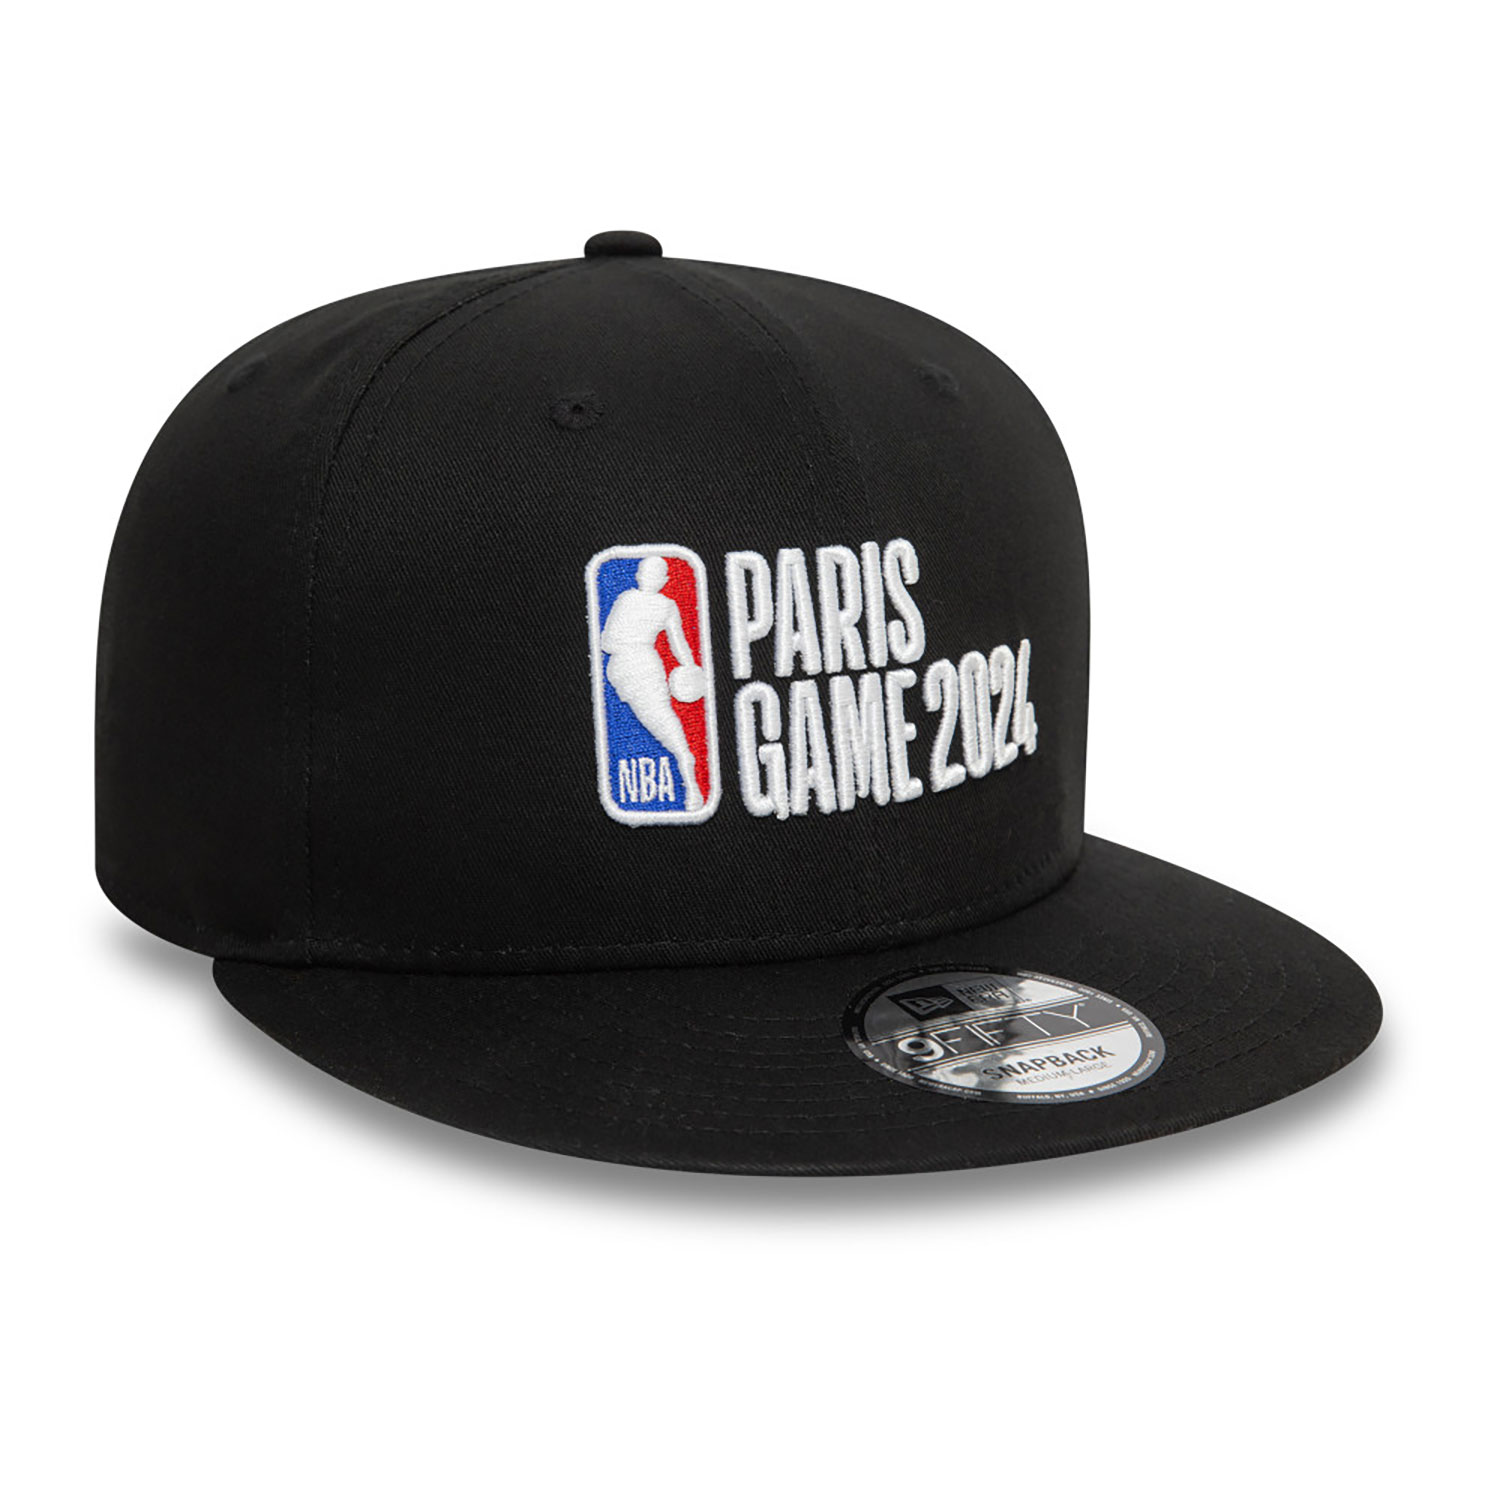 NBA Logo Paris 2024 Black 9FIFTY Snapback Cap